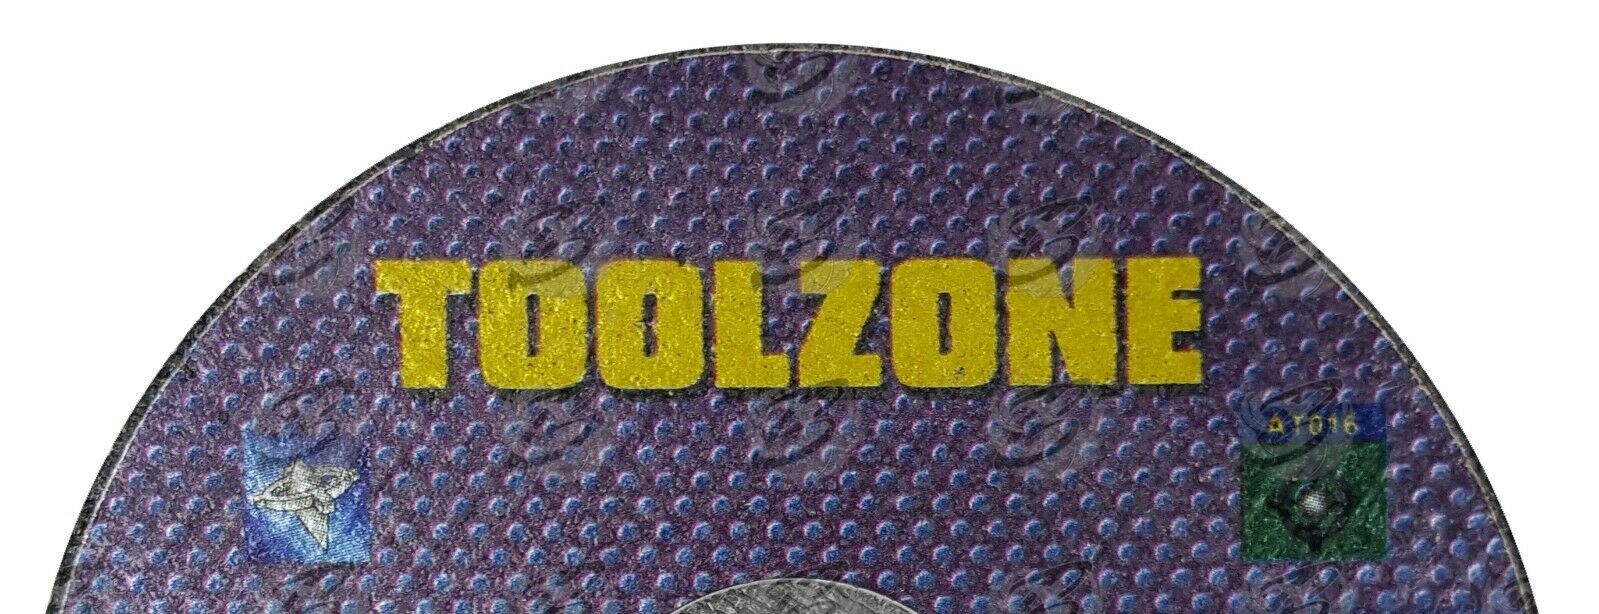 TOOLZONE 3" x 1MM METAL CUTTING DISC ( X 25 )